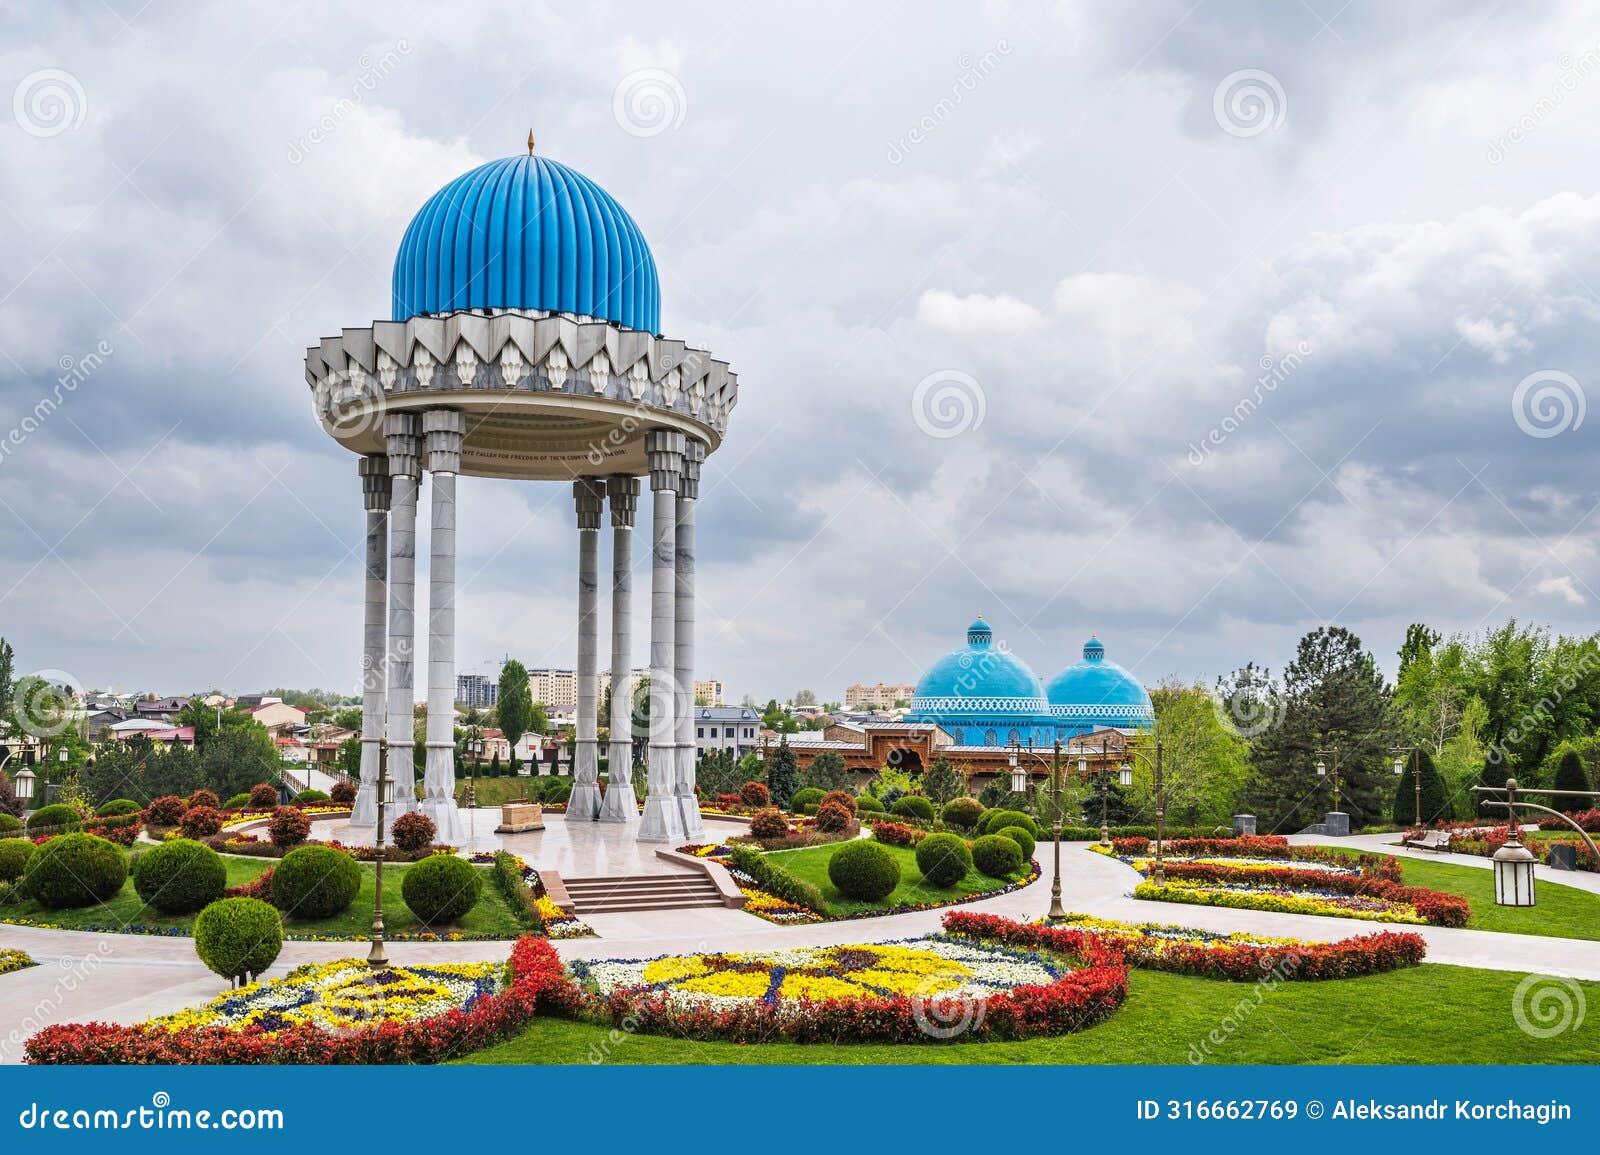 patriots memorial and museum of victims of political repression in park in spring in tashkent in uzbekistan